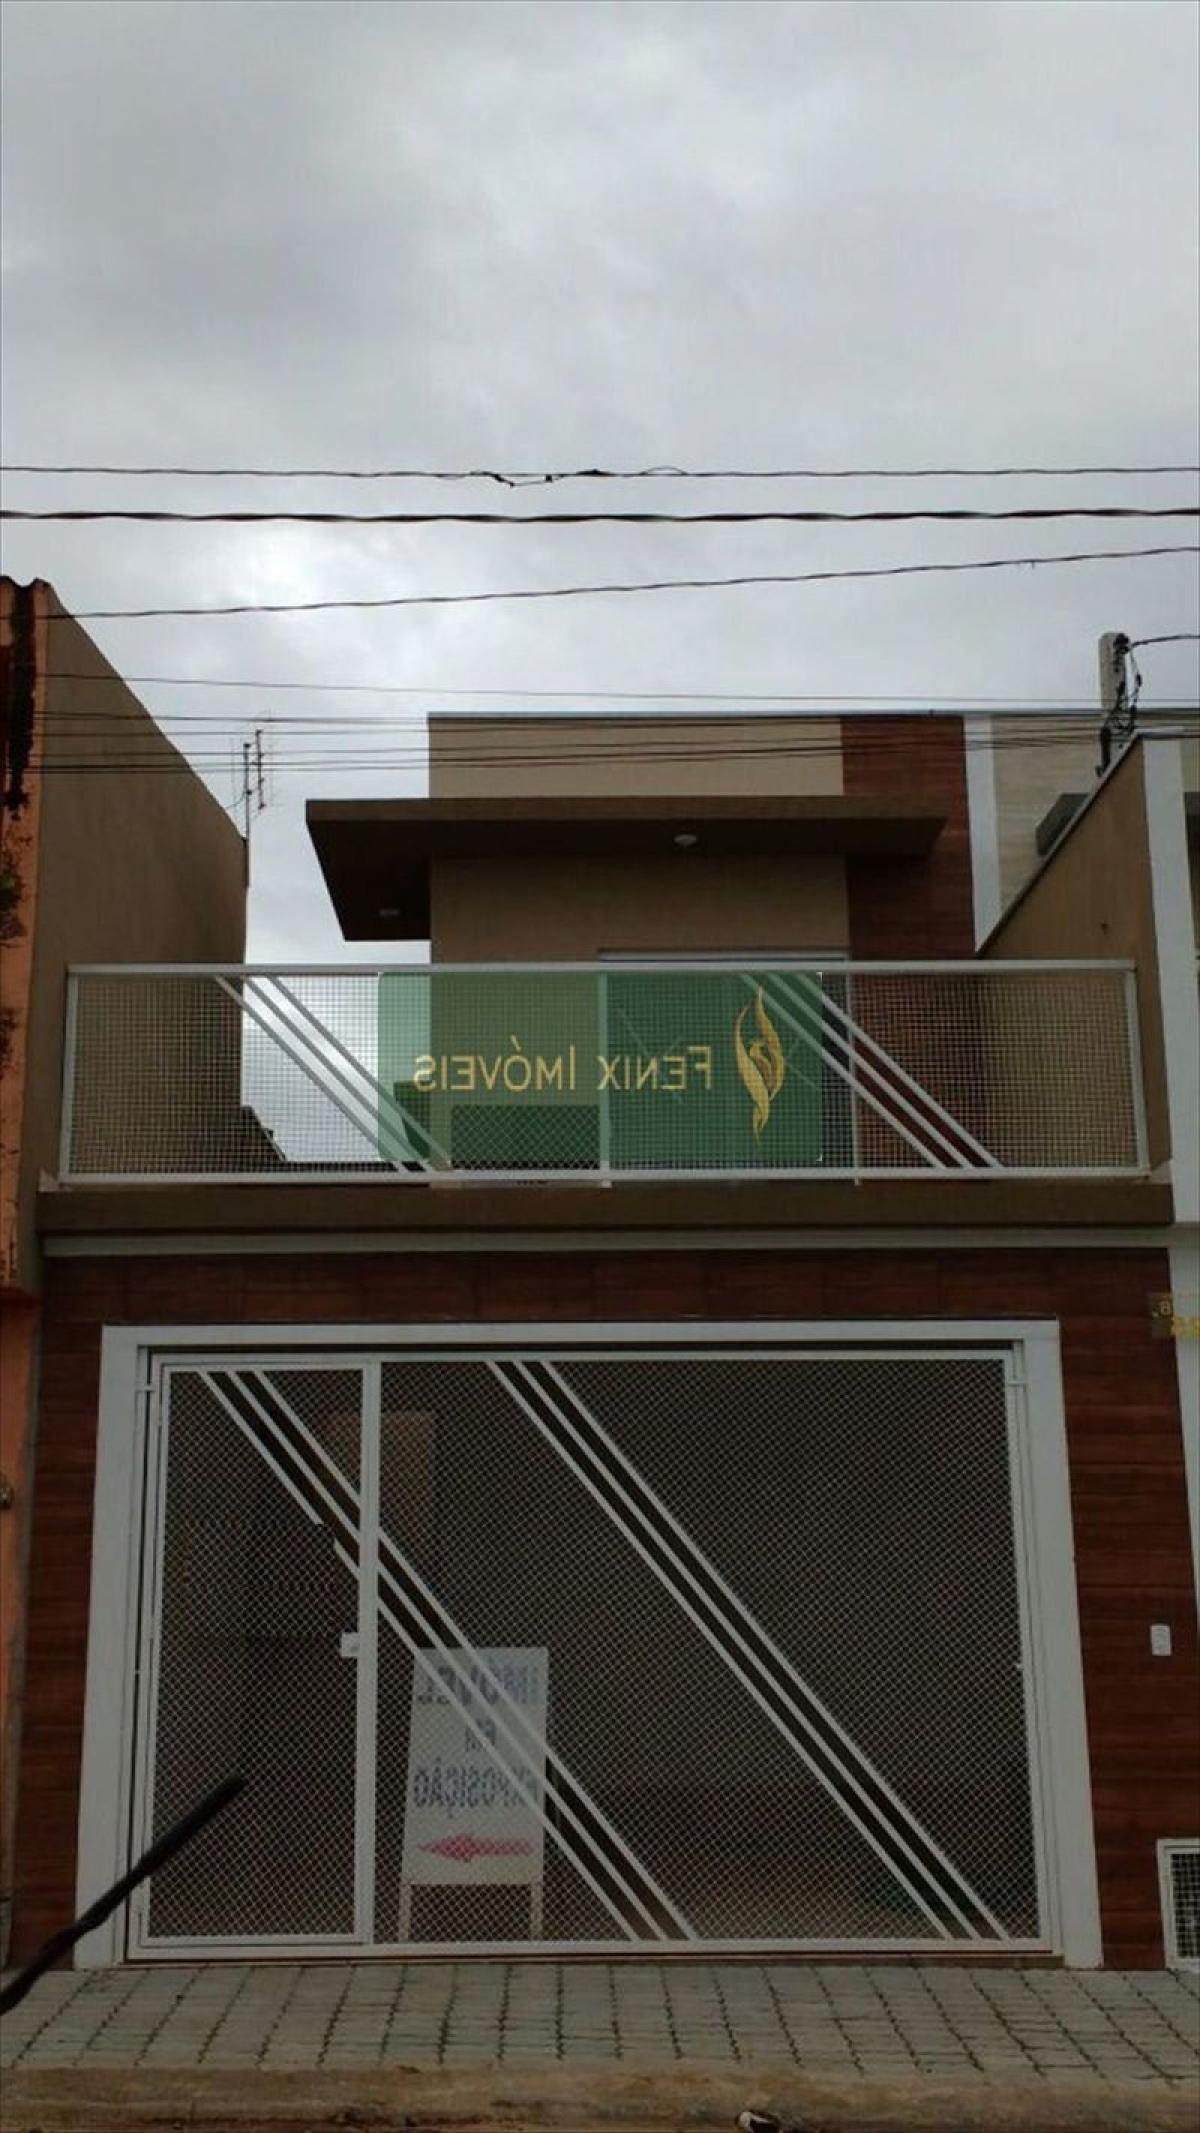 Picture of Townhome For Sale in Atibaia, Sao Paulo, Brazil